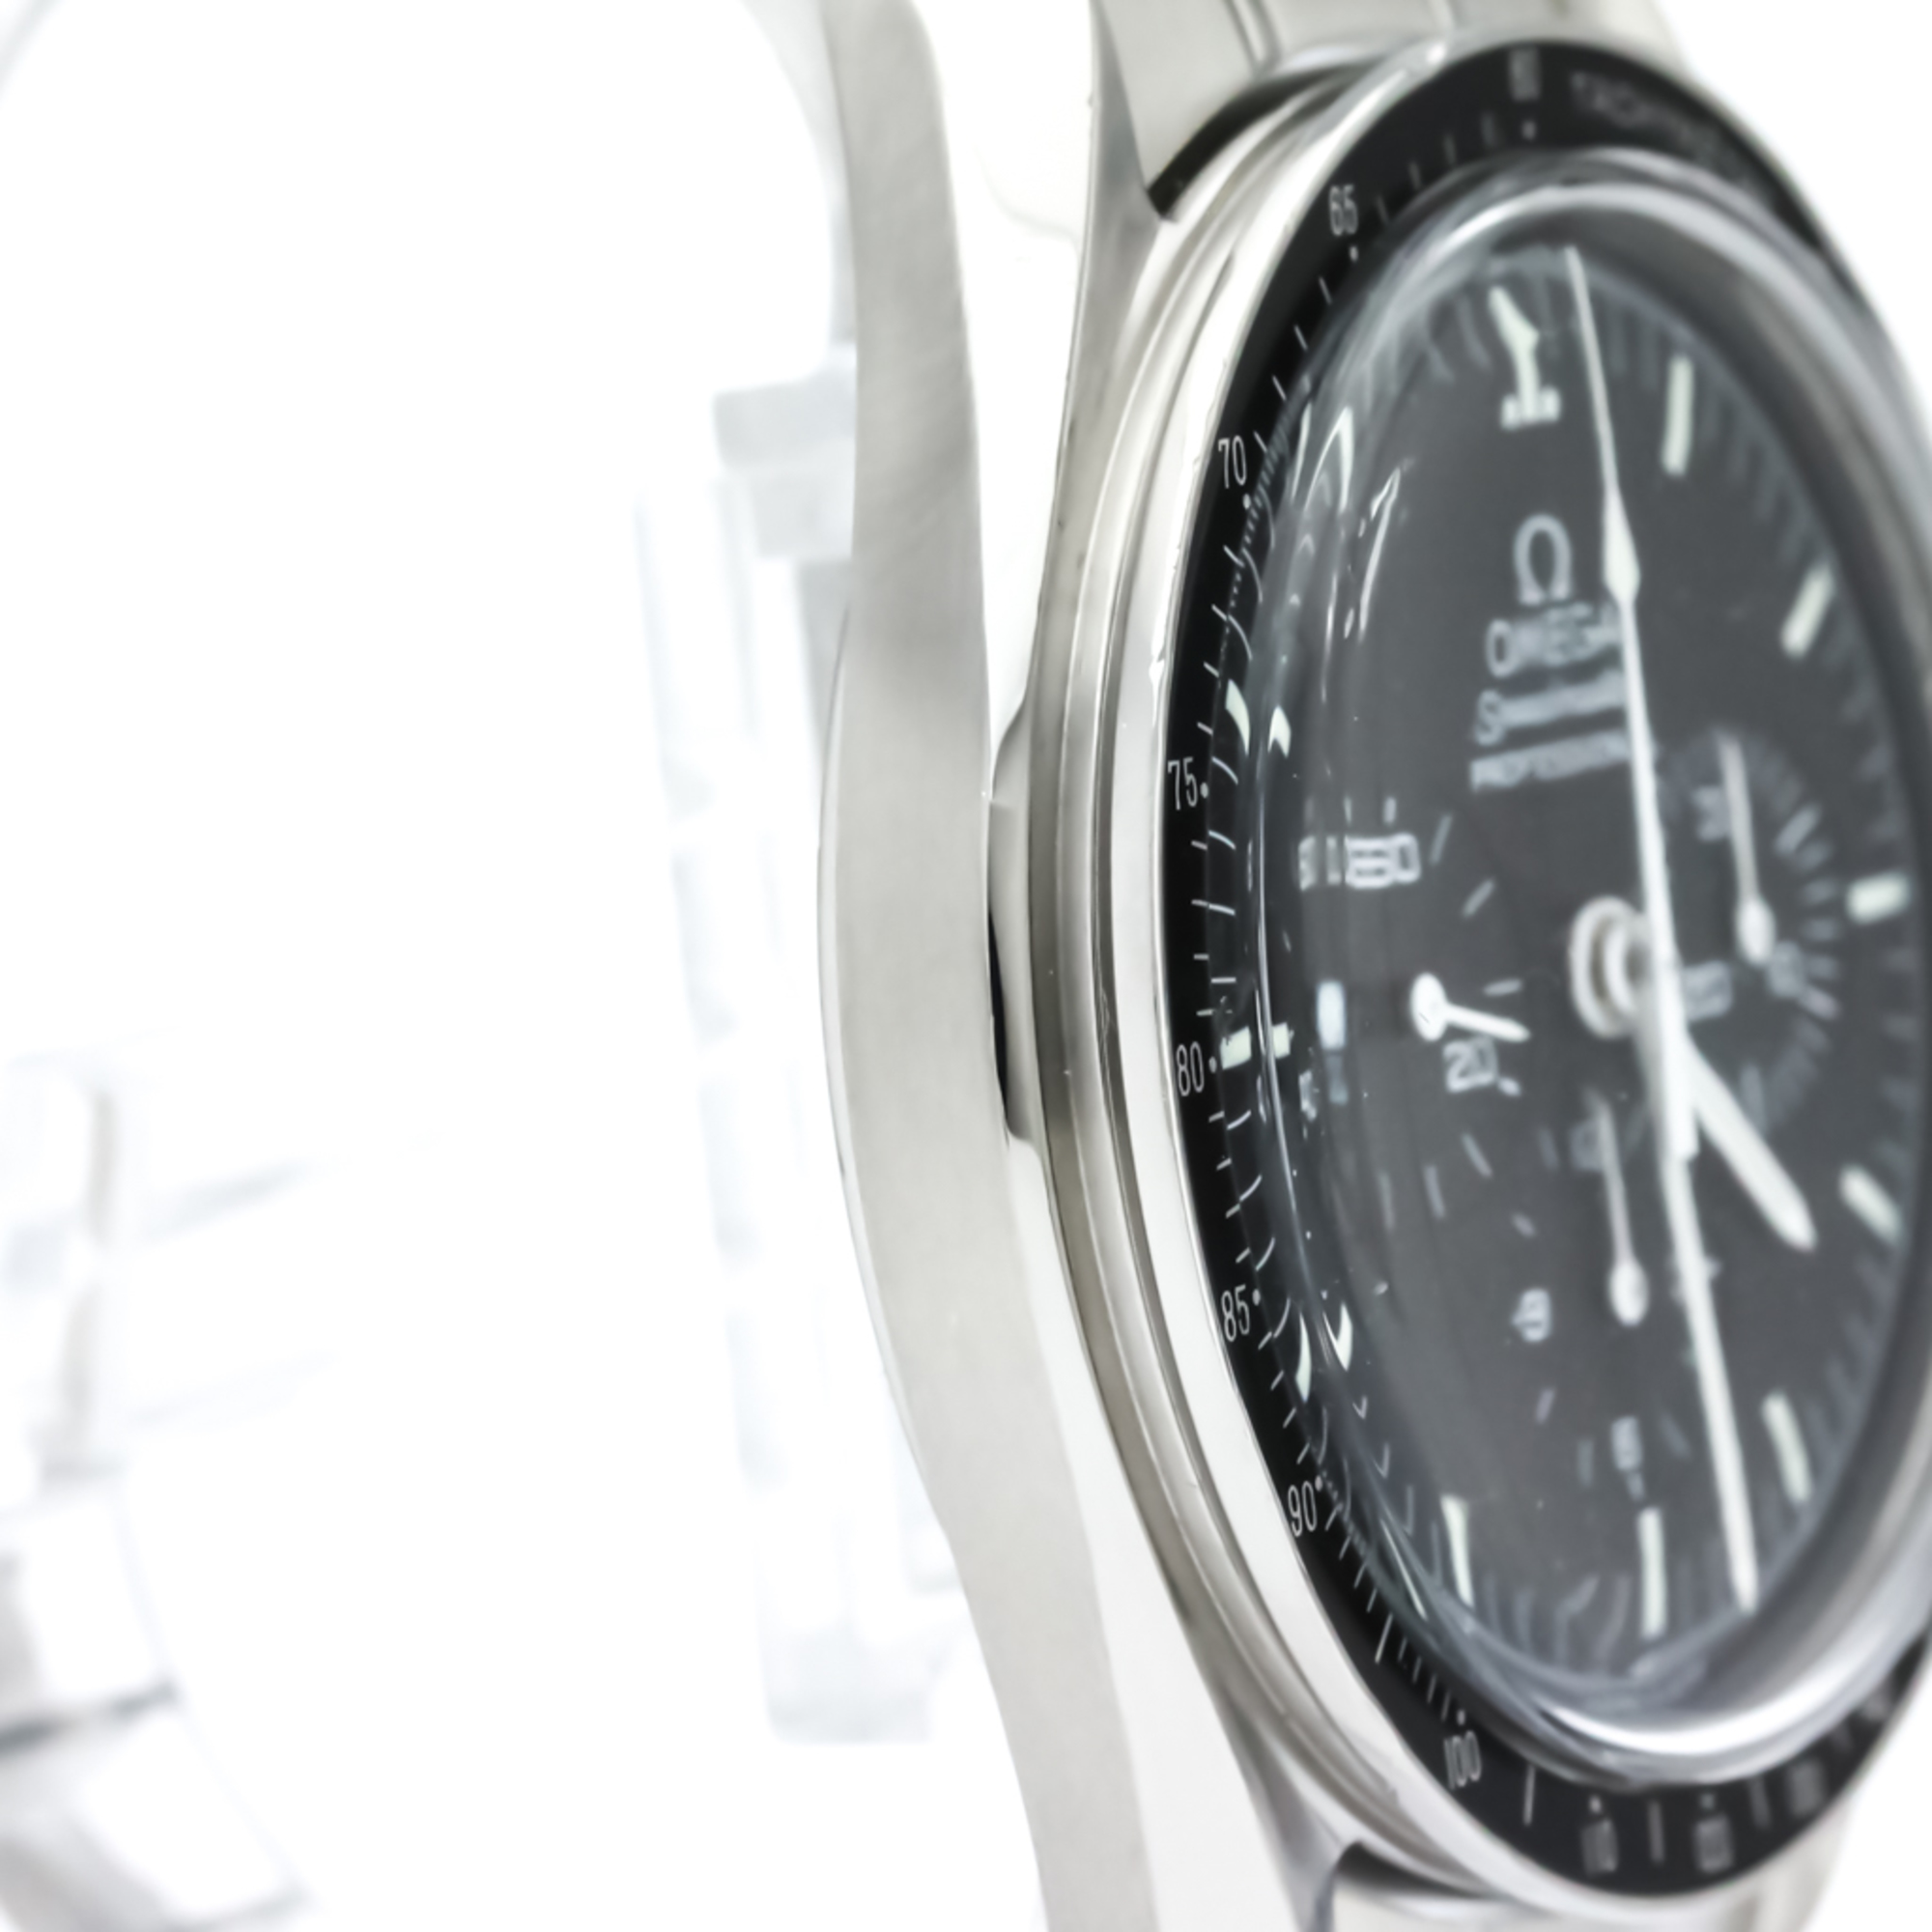 OMEGA Speedmaster Professional Steel Moon Watch 3570.50